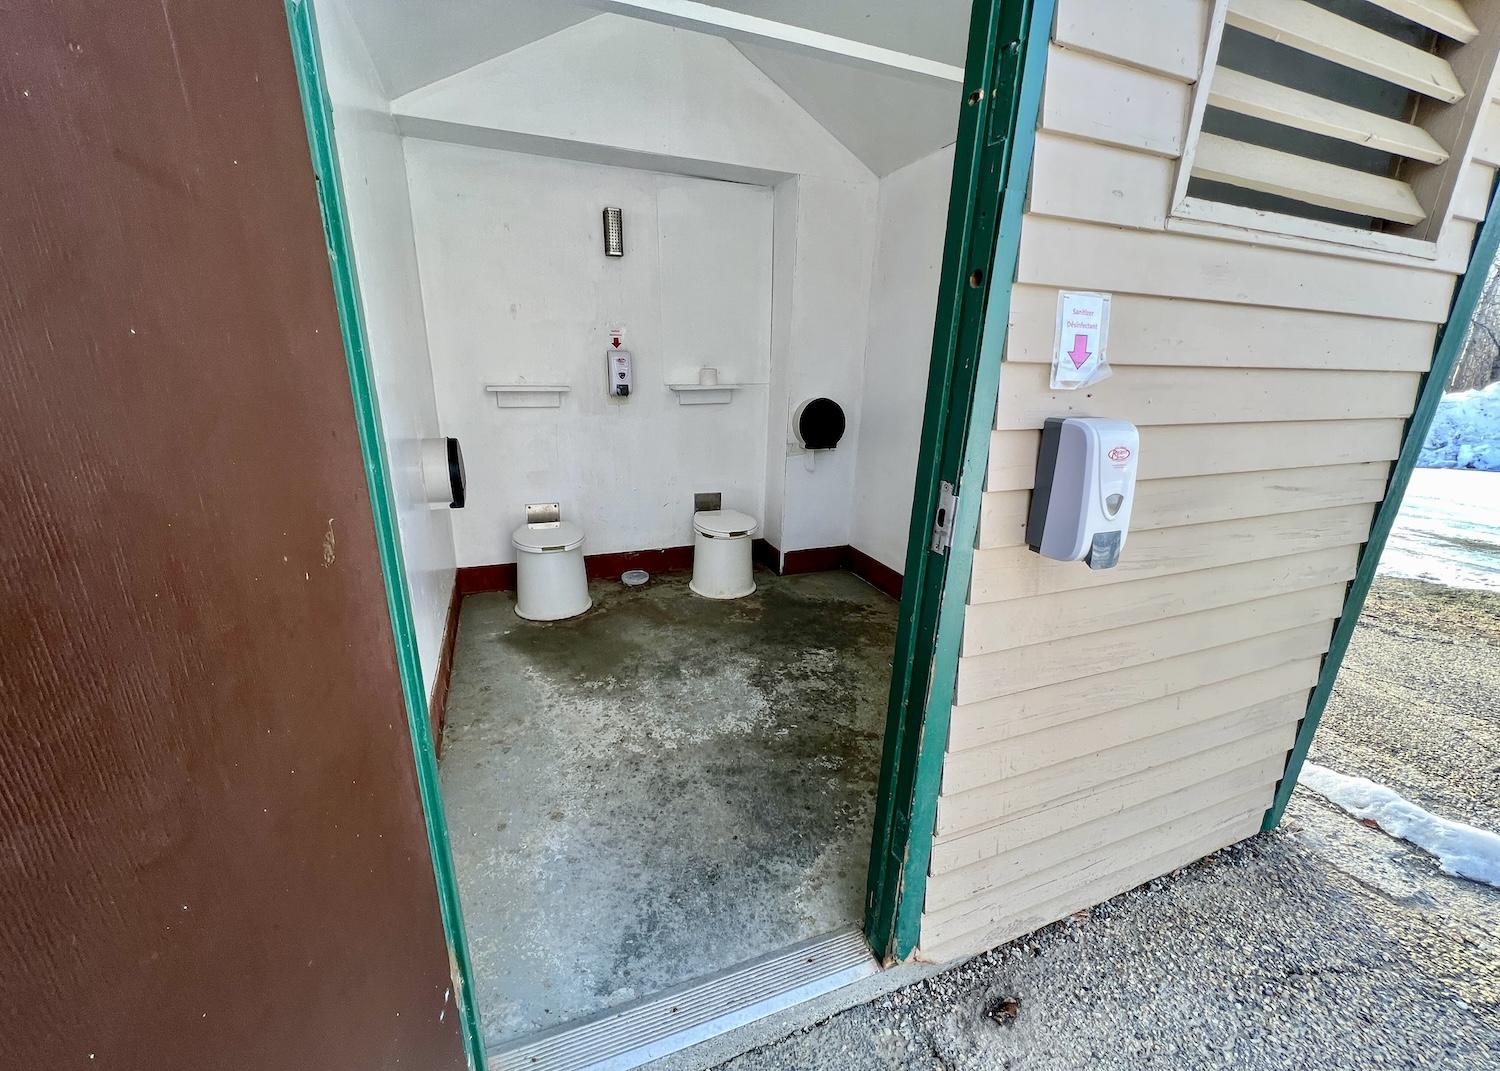 At Elk Island National Park, this washroom randomly has two toilets.